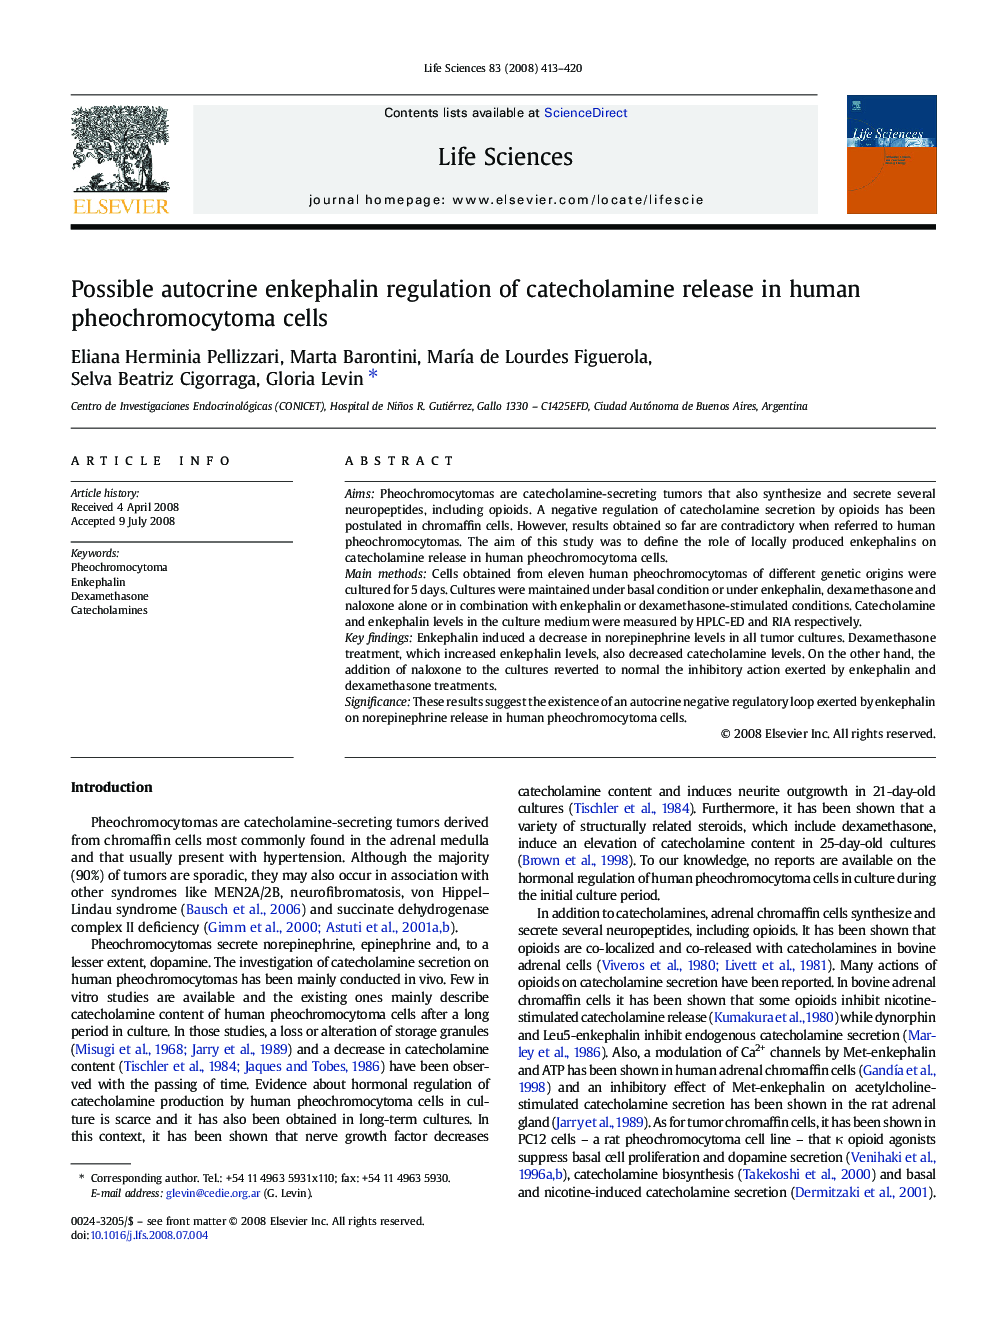 Possible autocrine enkephalin regulation of catecholamine release in human pheochromocytoma cells